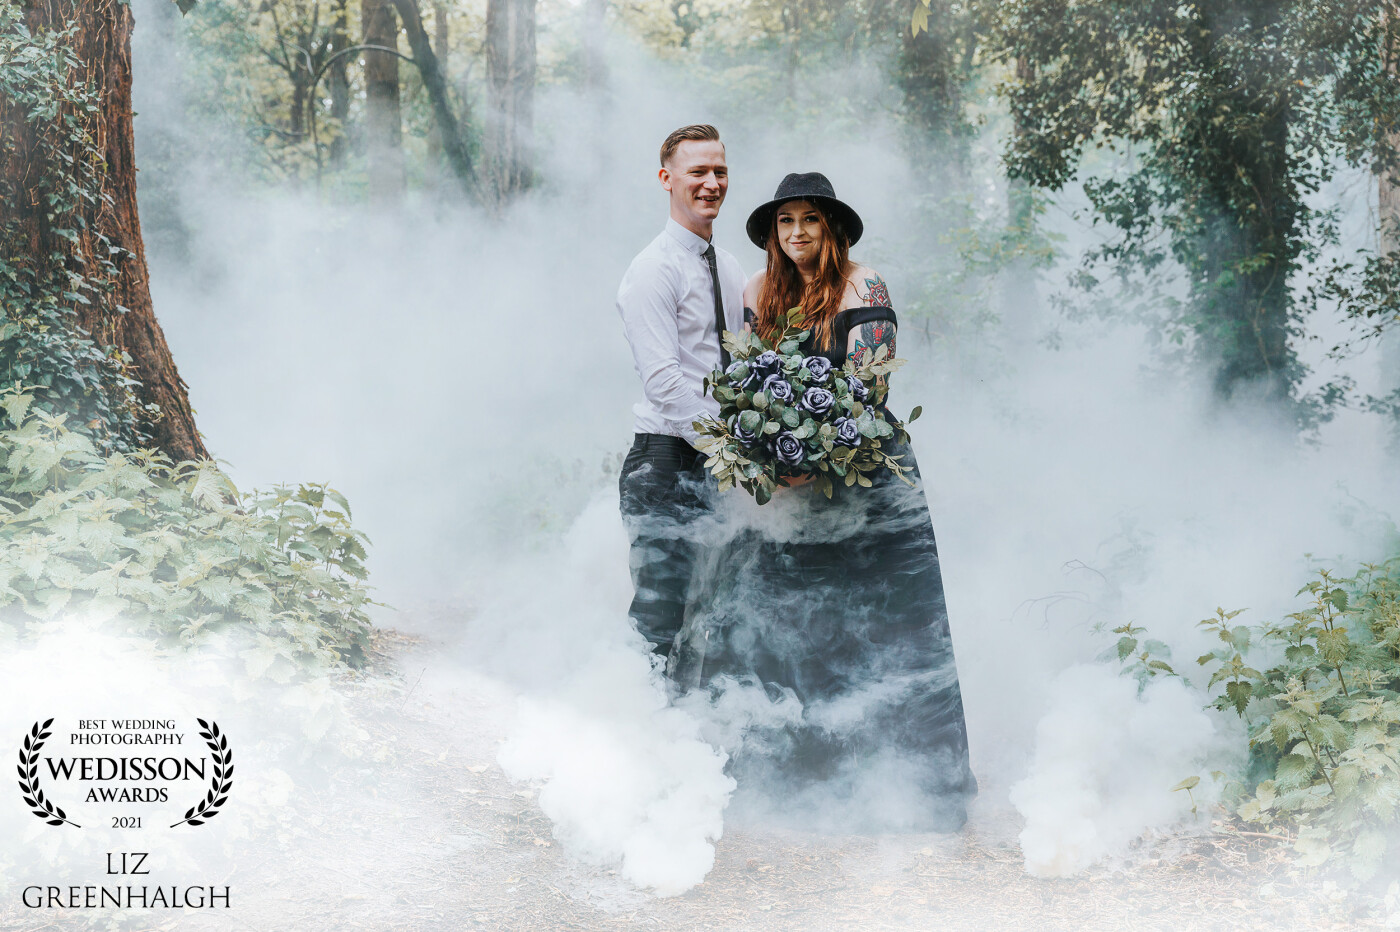 For an alternative wedding, smoke bombs were a must